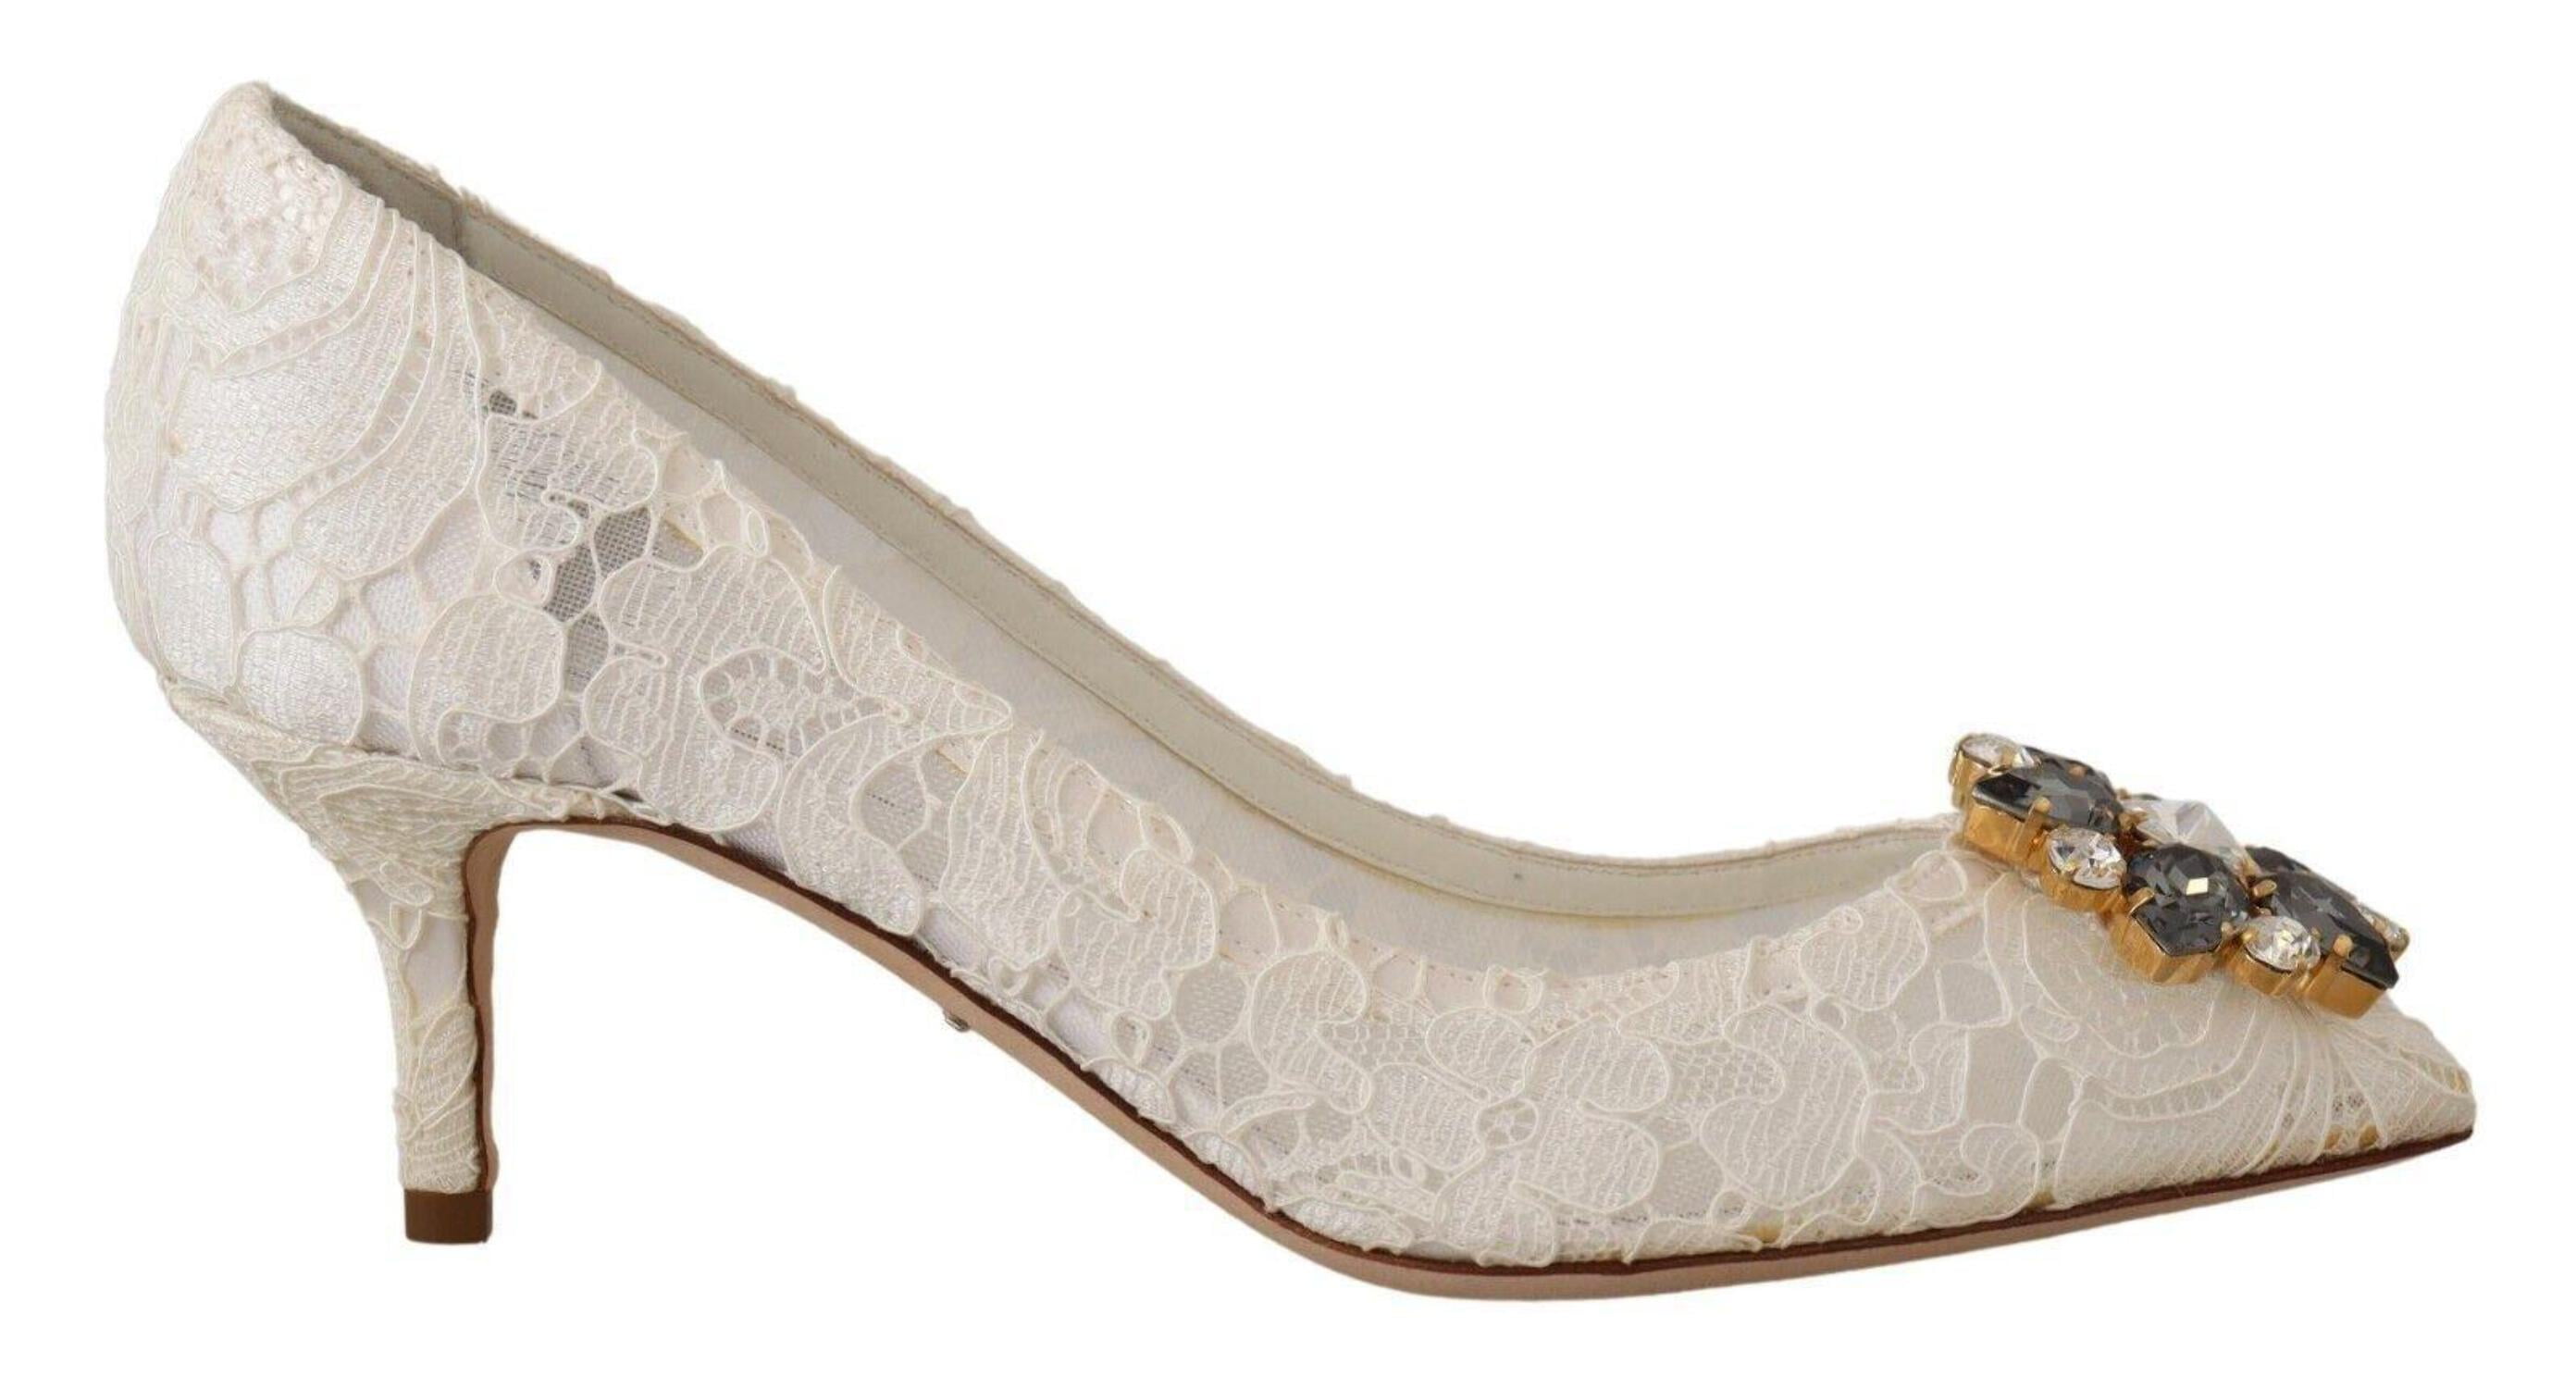 Dolce & Gabbana High Heels & Pumps for Women - prices in dubai | FASHIOLA  UAE